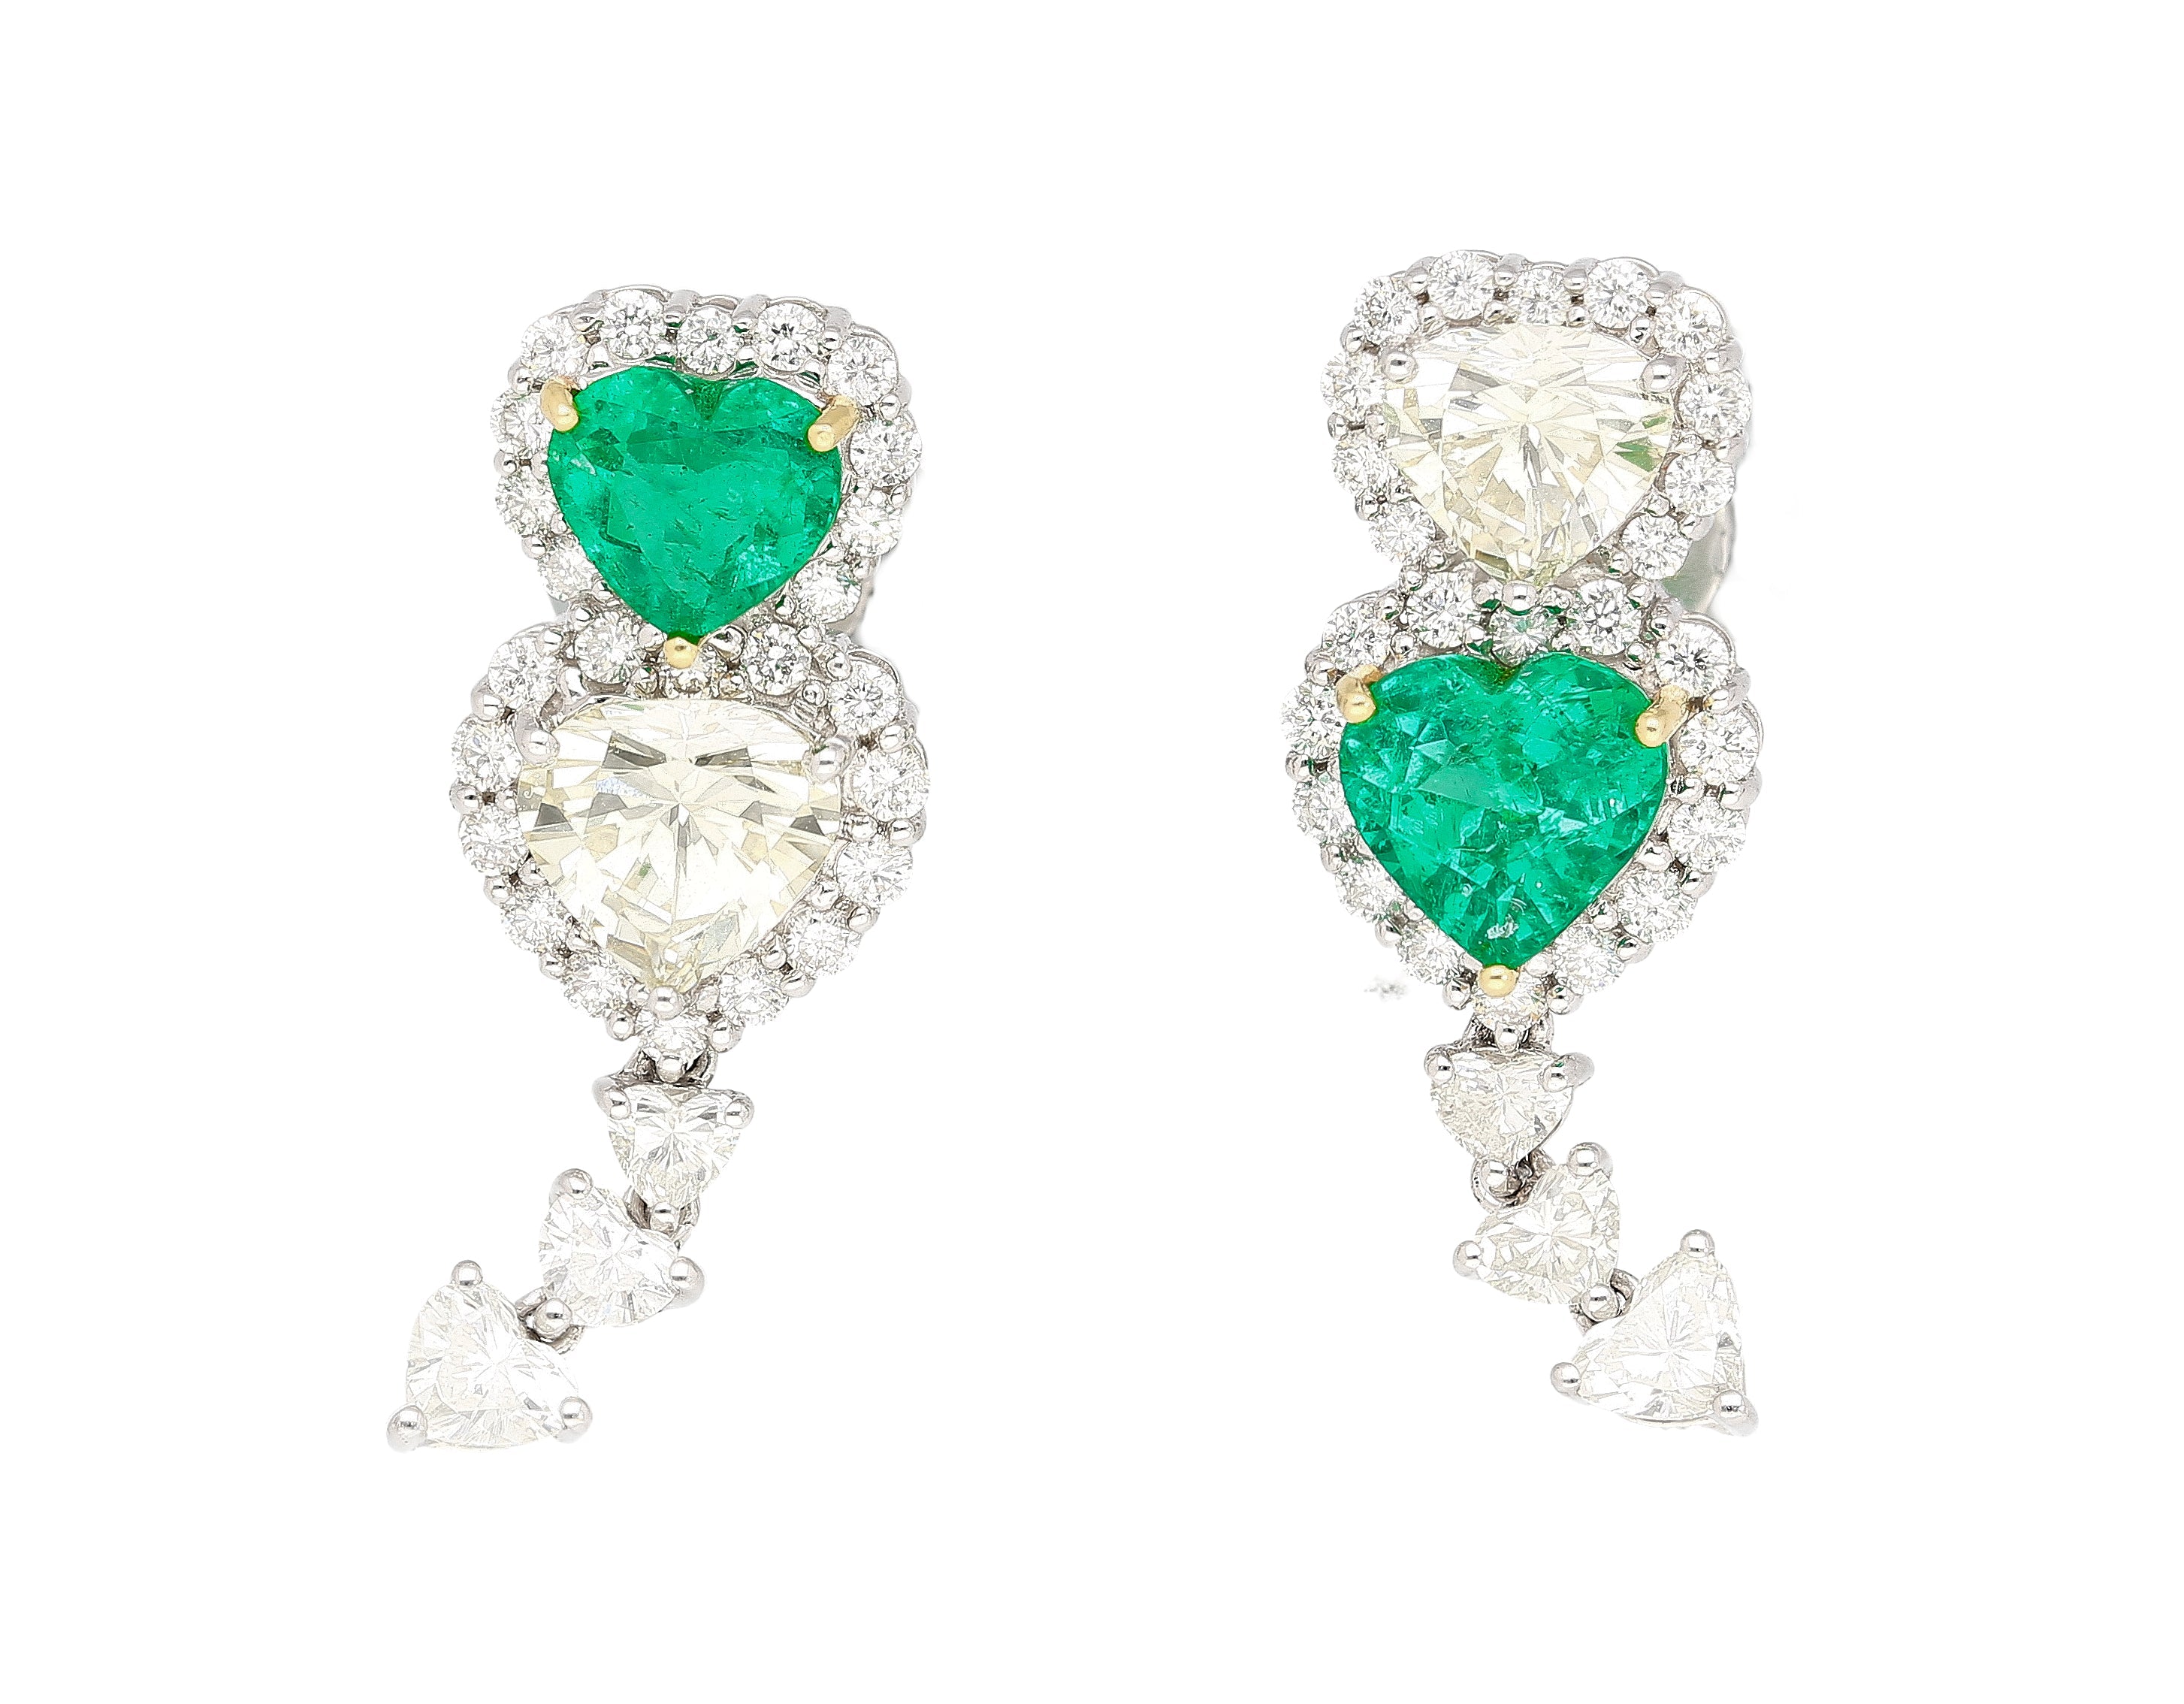 Natural-Diamond-and-Emerald-Heart-Cut-Mirrored-Drop-Earrings-in-18k-White-Gold-Earrings-2.jpg